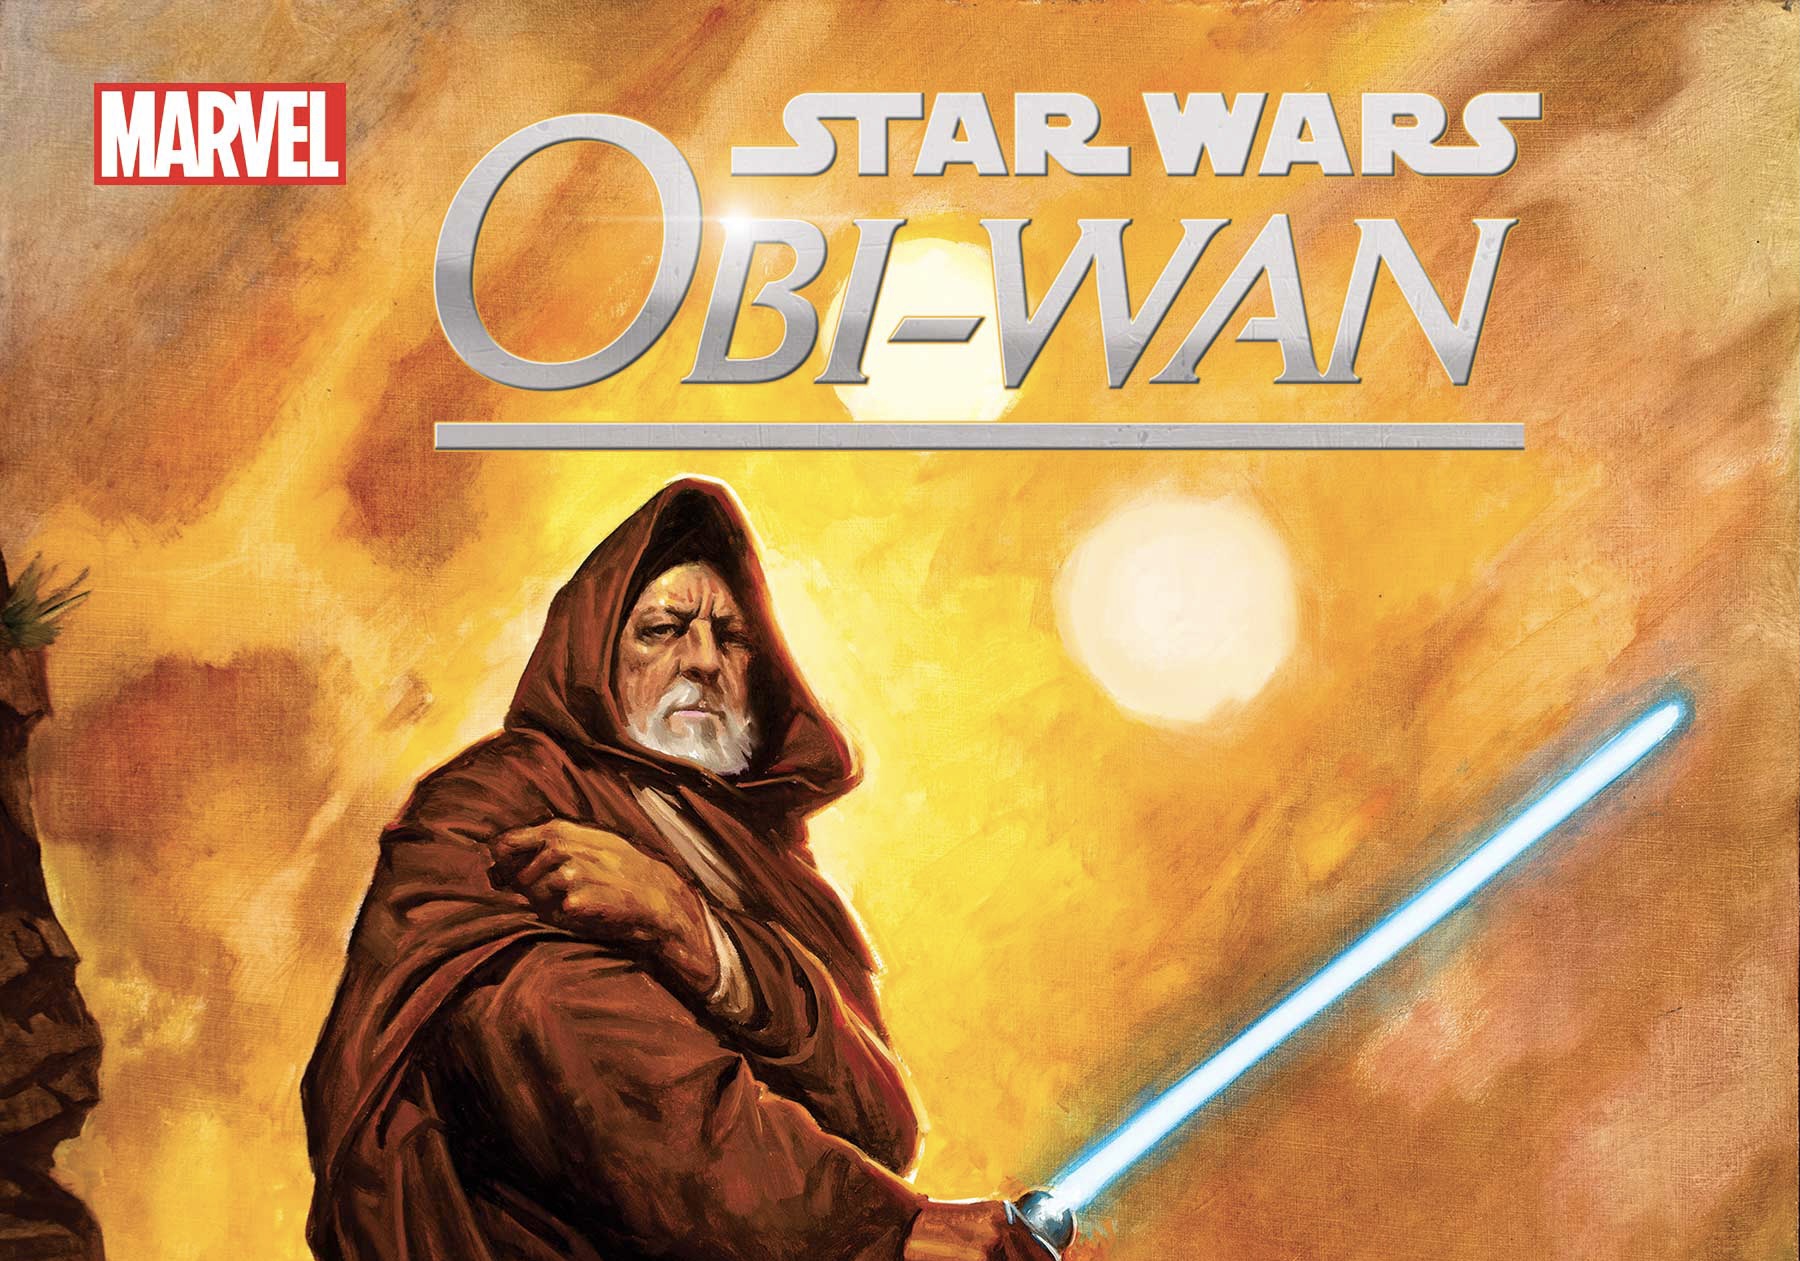 Star Wars: Obi-Wan Kenobi – The Comic Book Collection of Obi-Wan’s Life